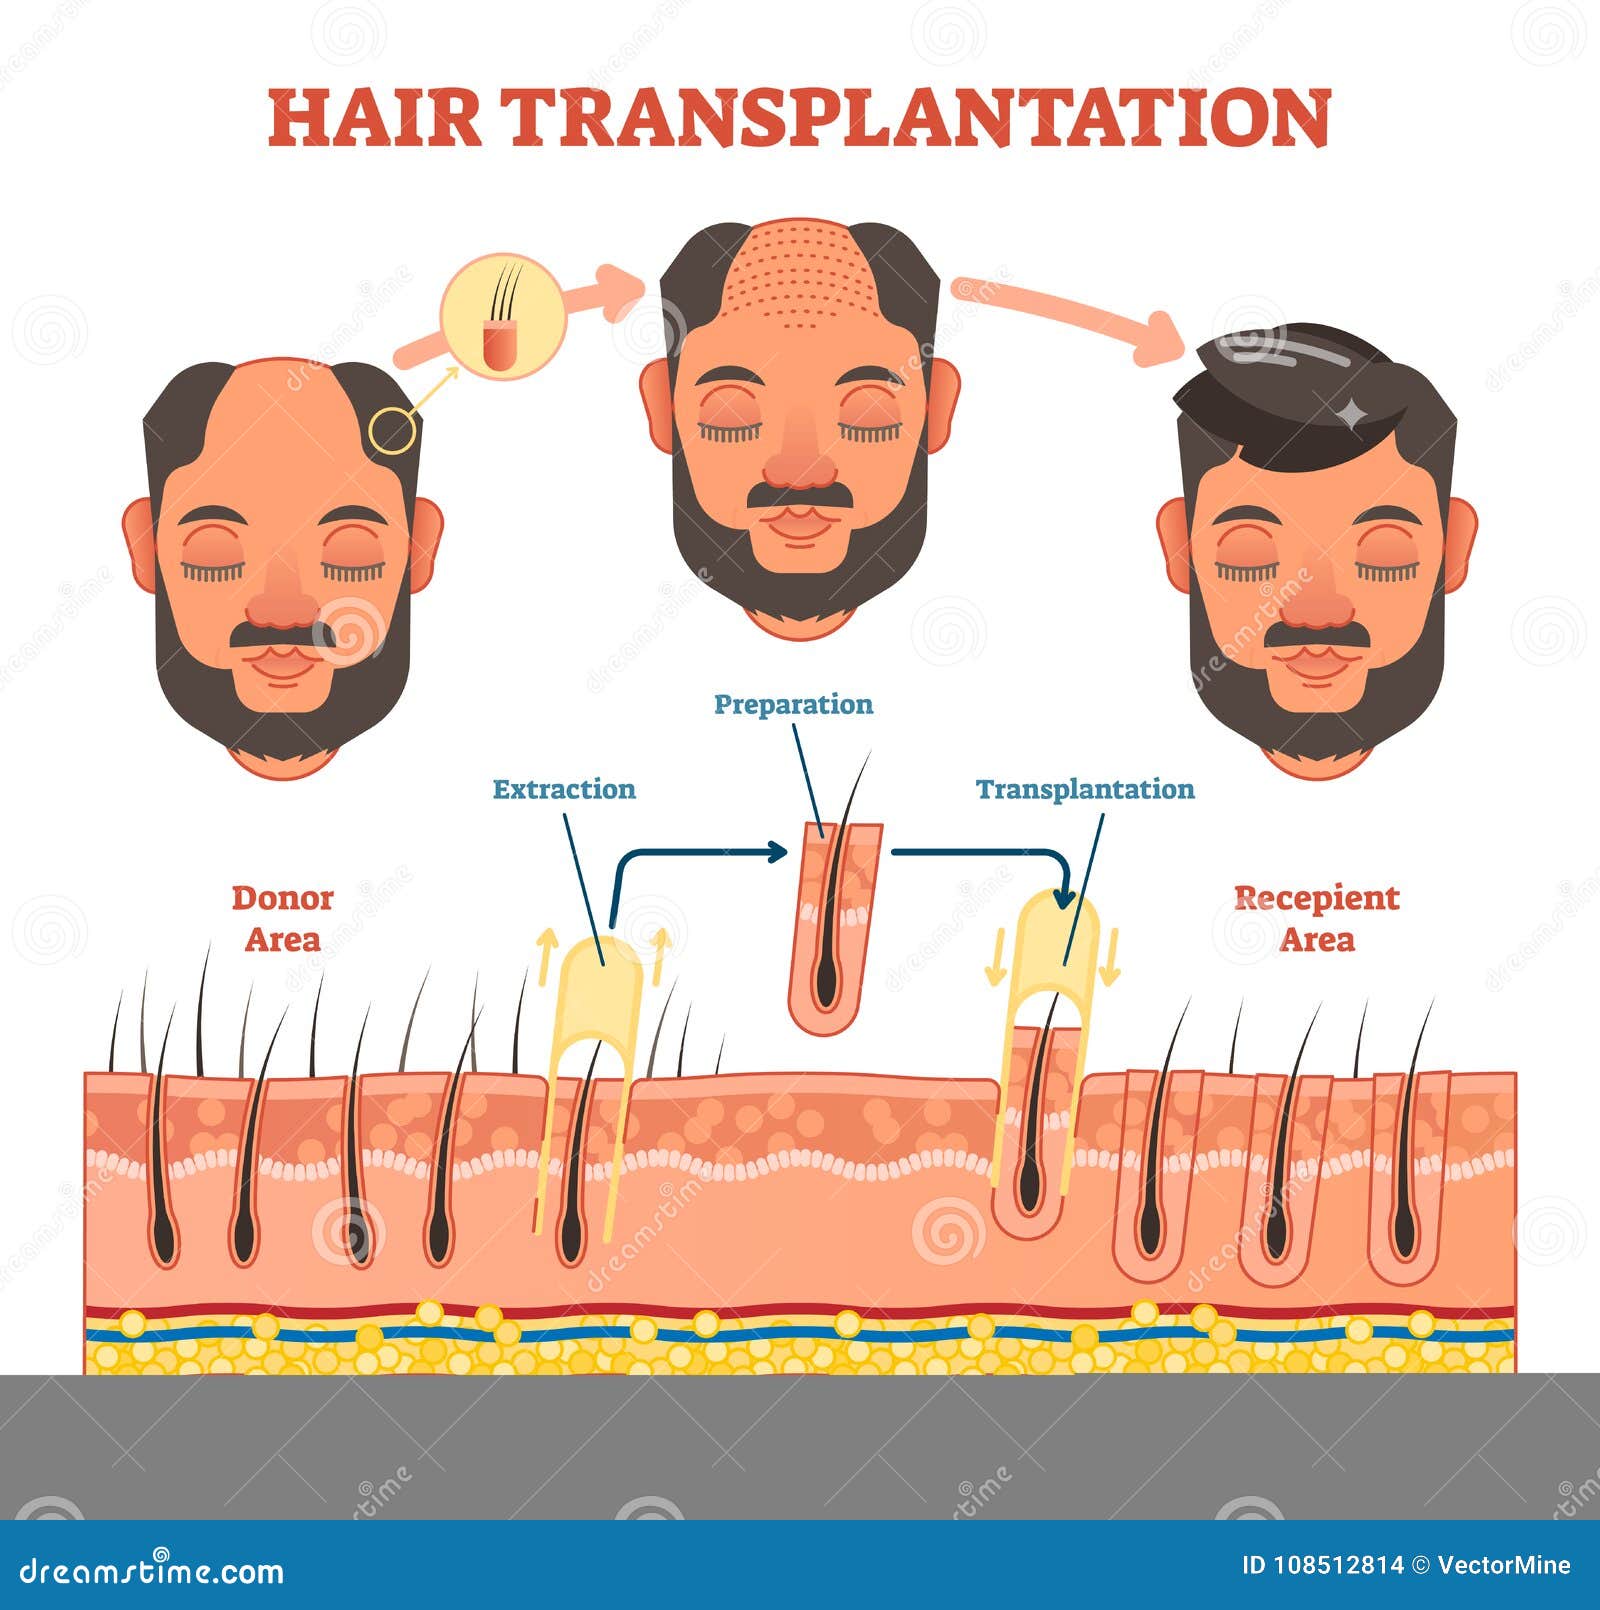 hair transplantation procedure diagram with steps